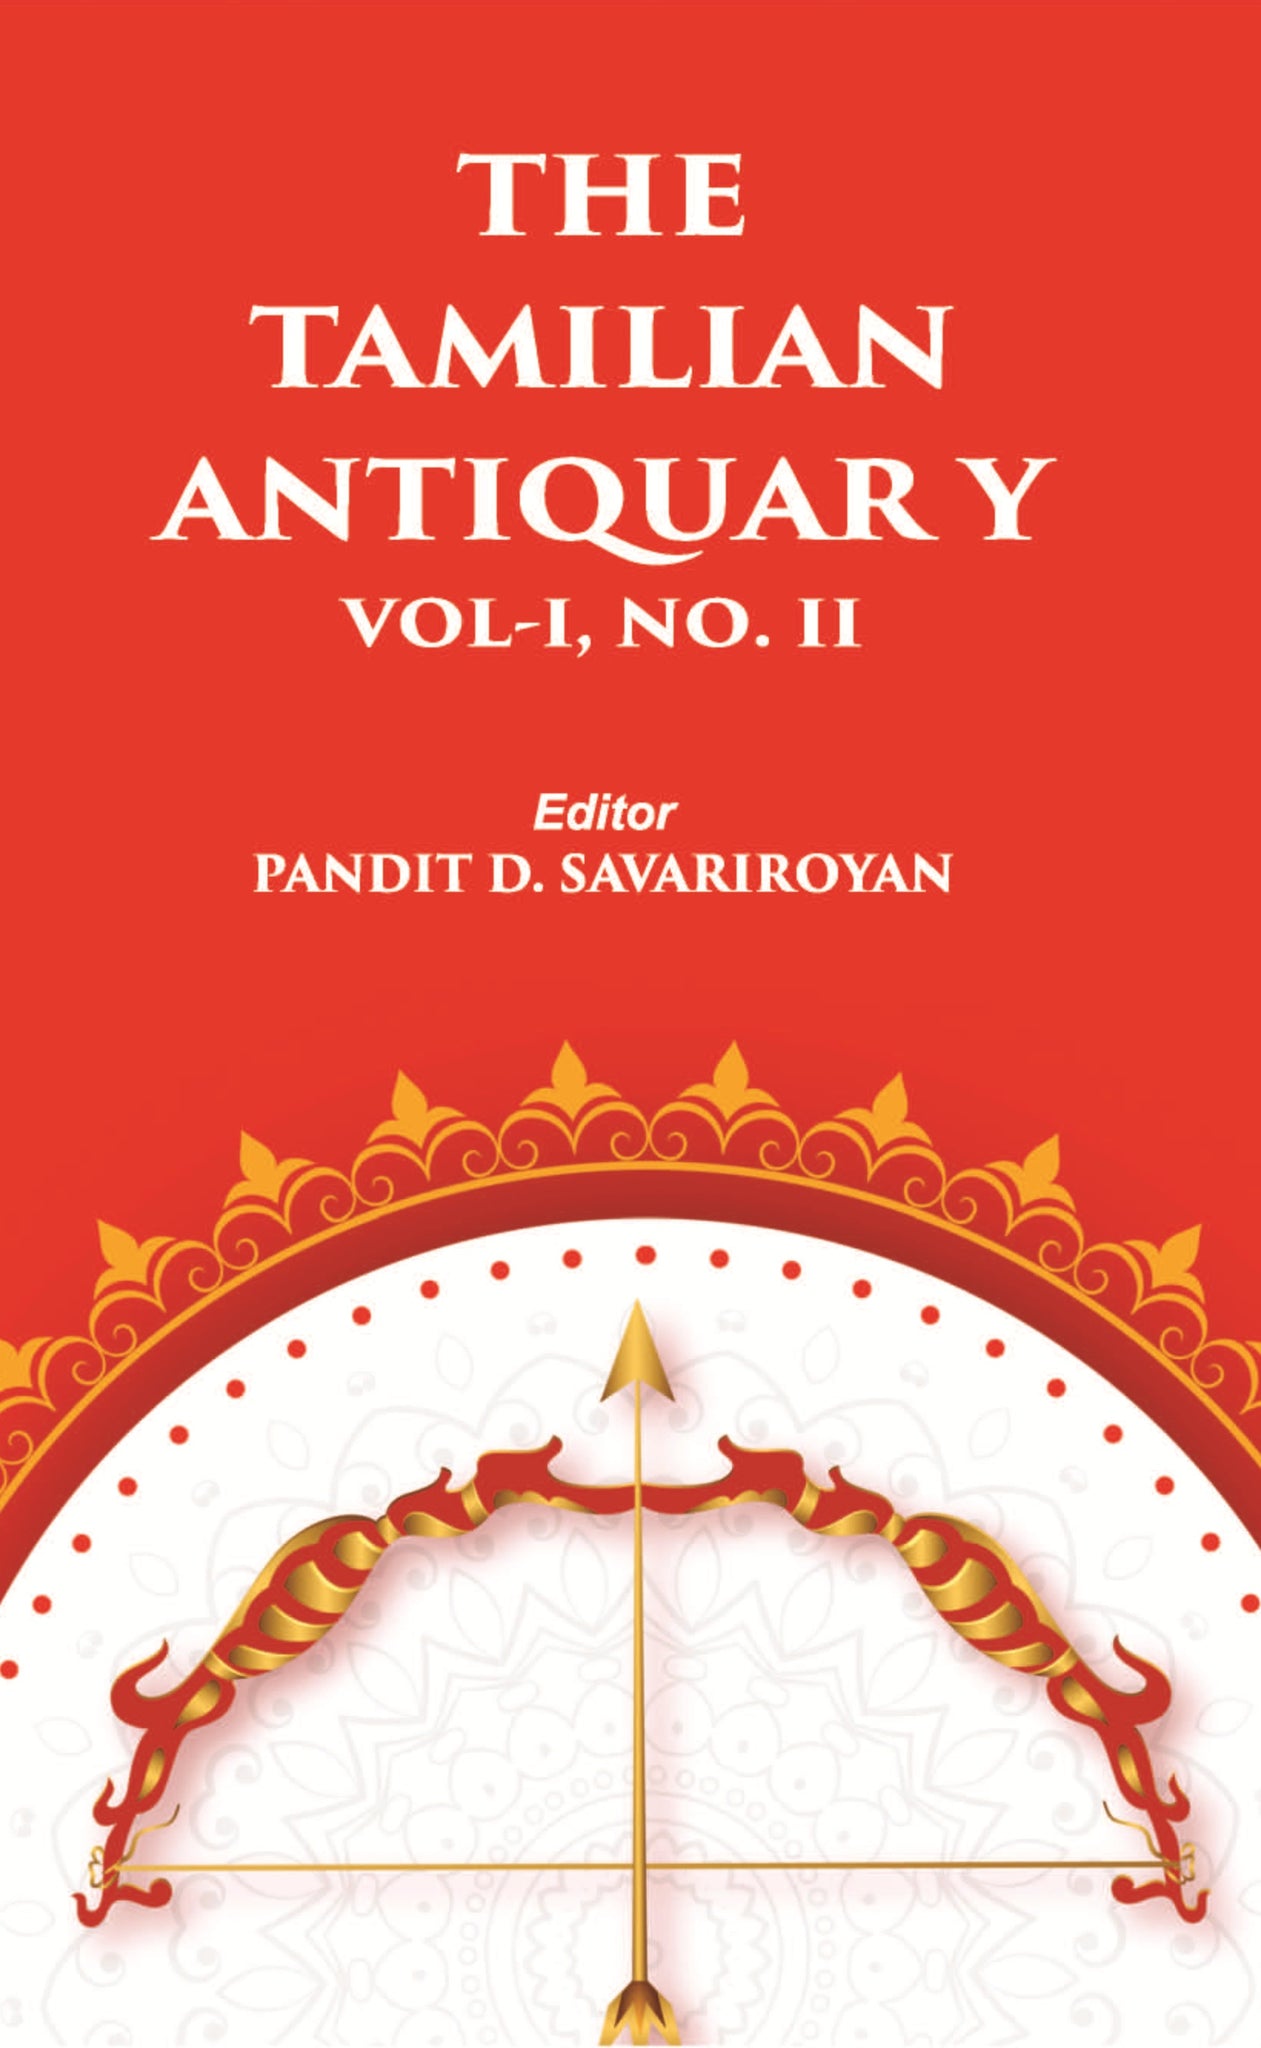 THE TAMILIAN ANTIQUARY Volume Vol. I, No. II